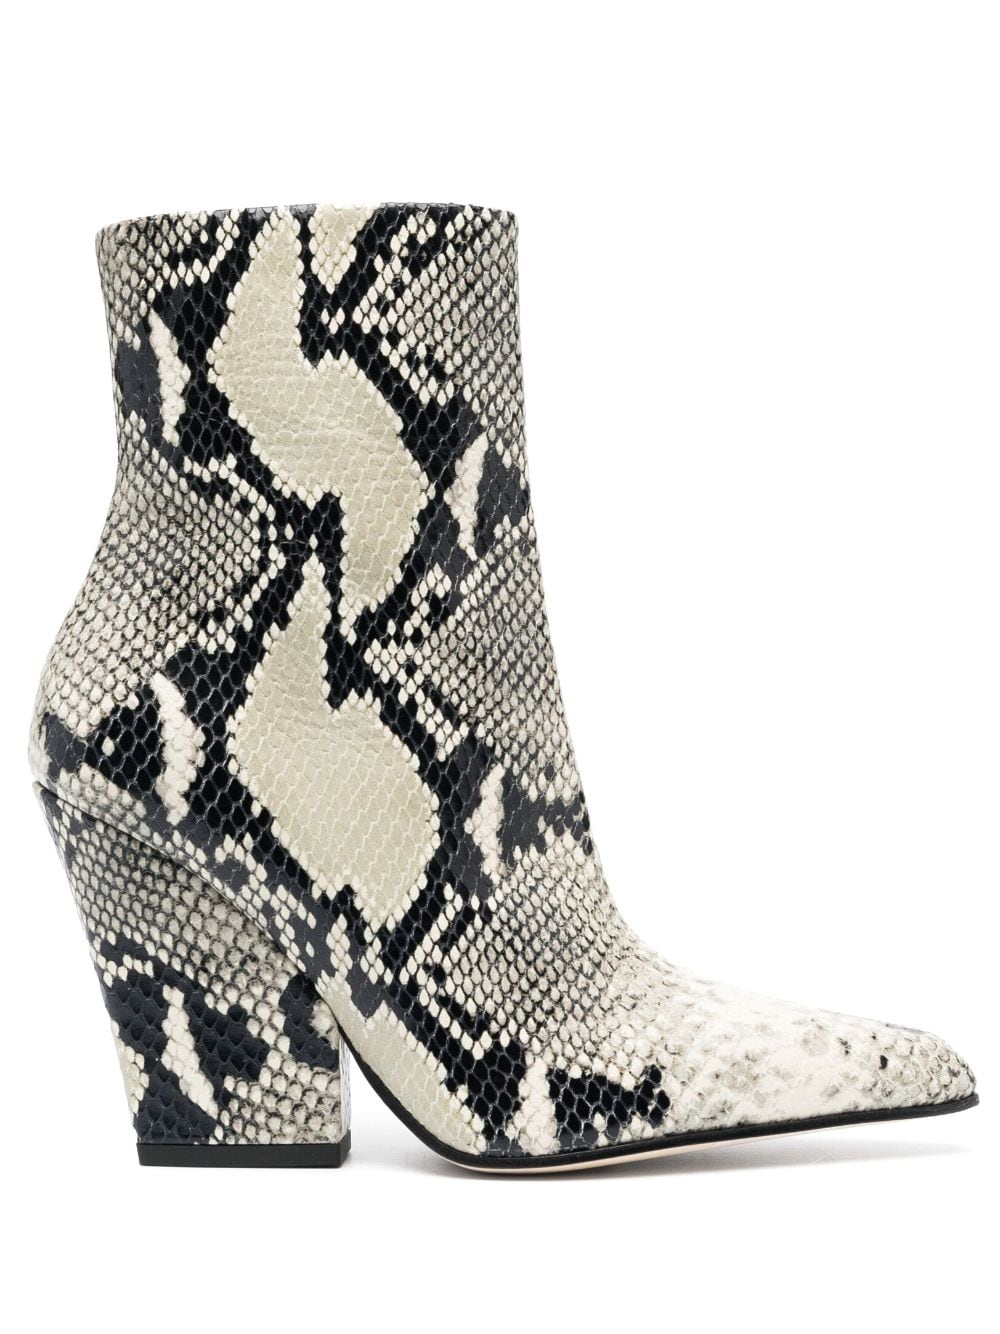 Paris Texas Jane 10mm snakeskin-print ankle boots - Black von Paris Texas